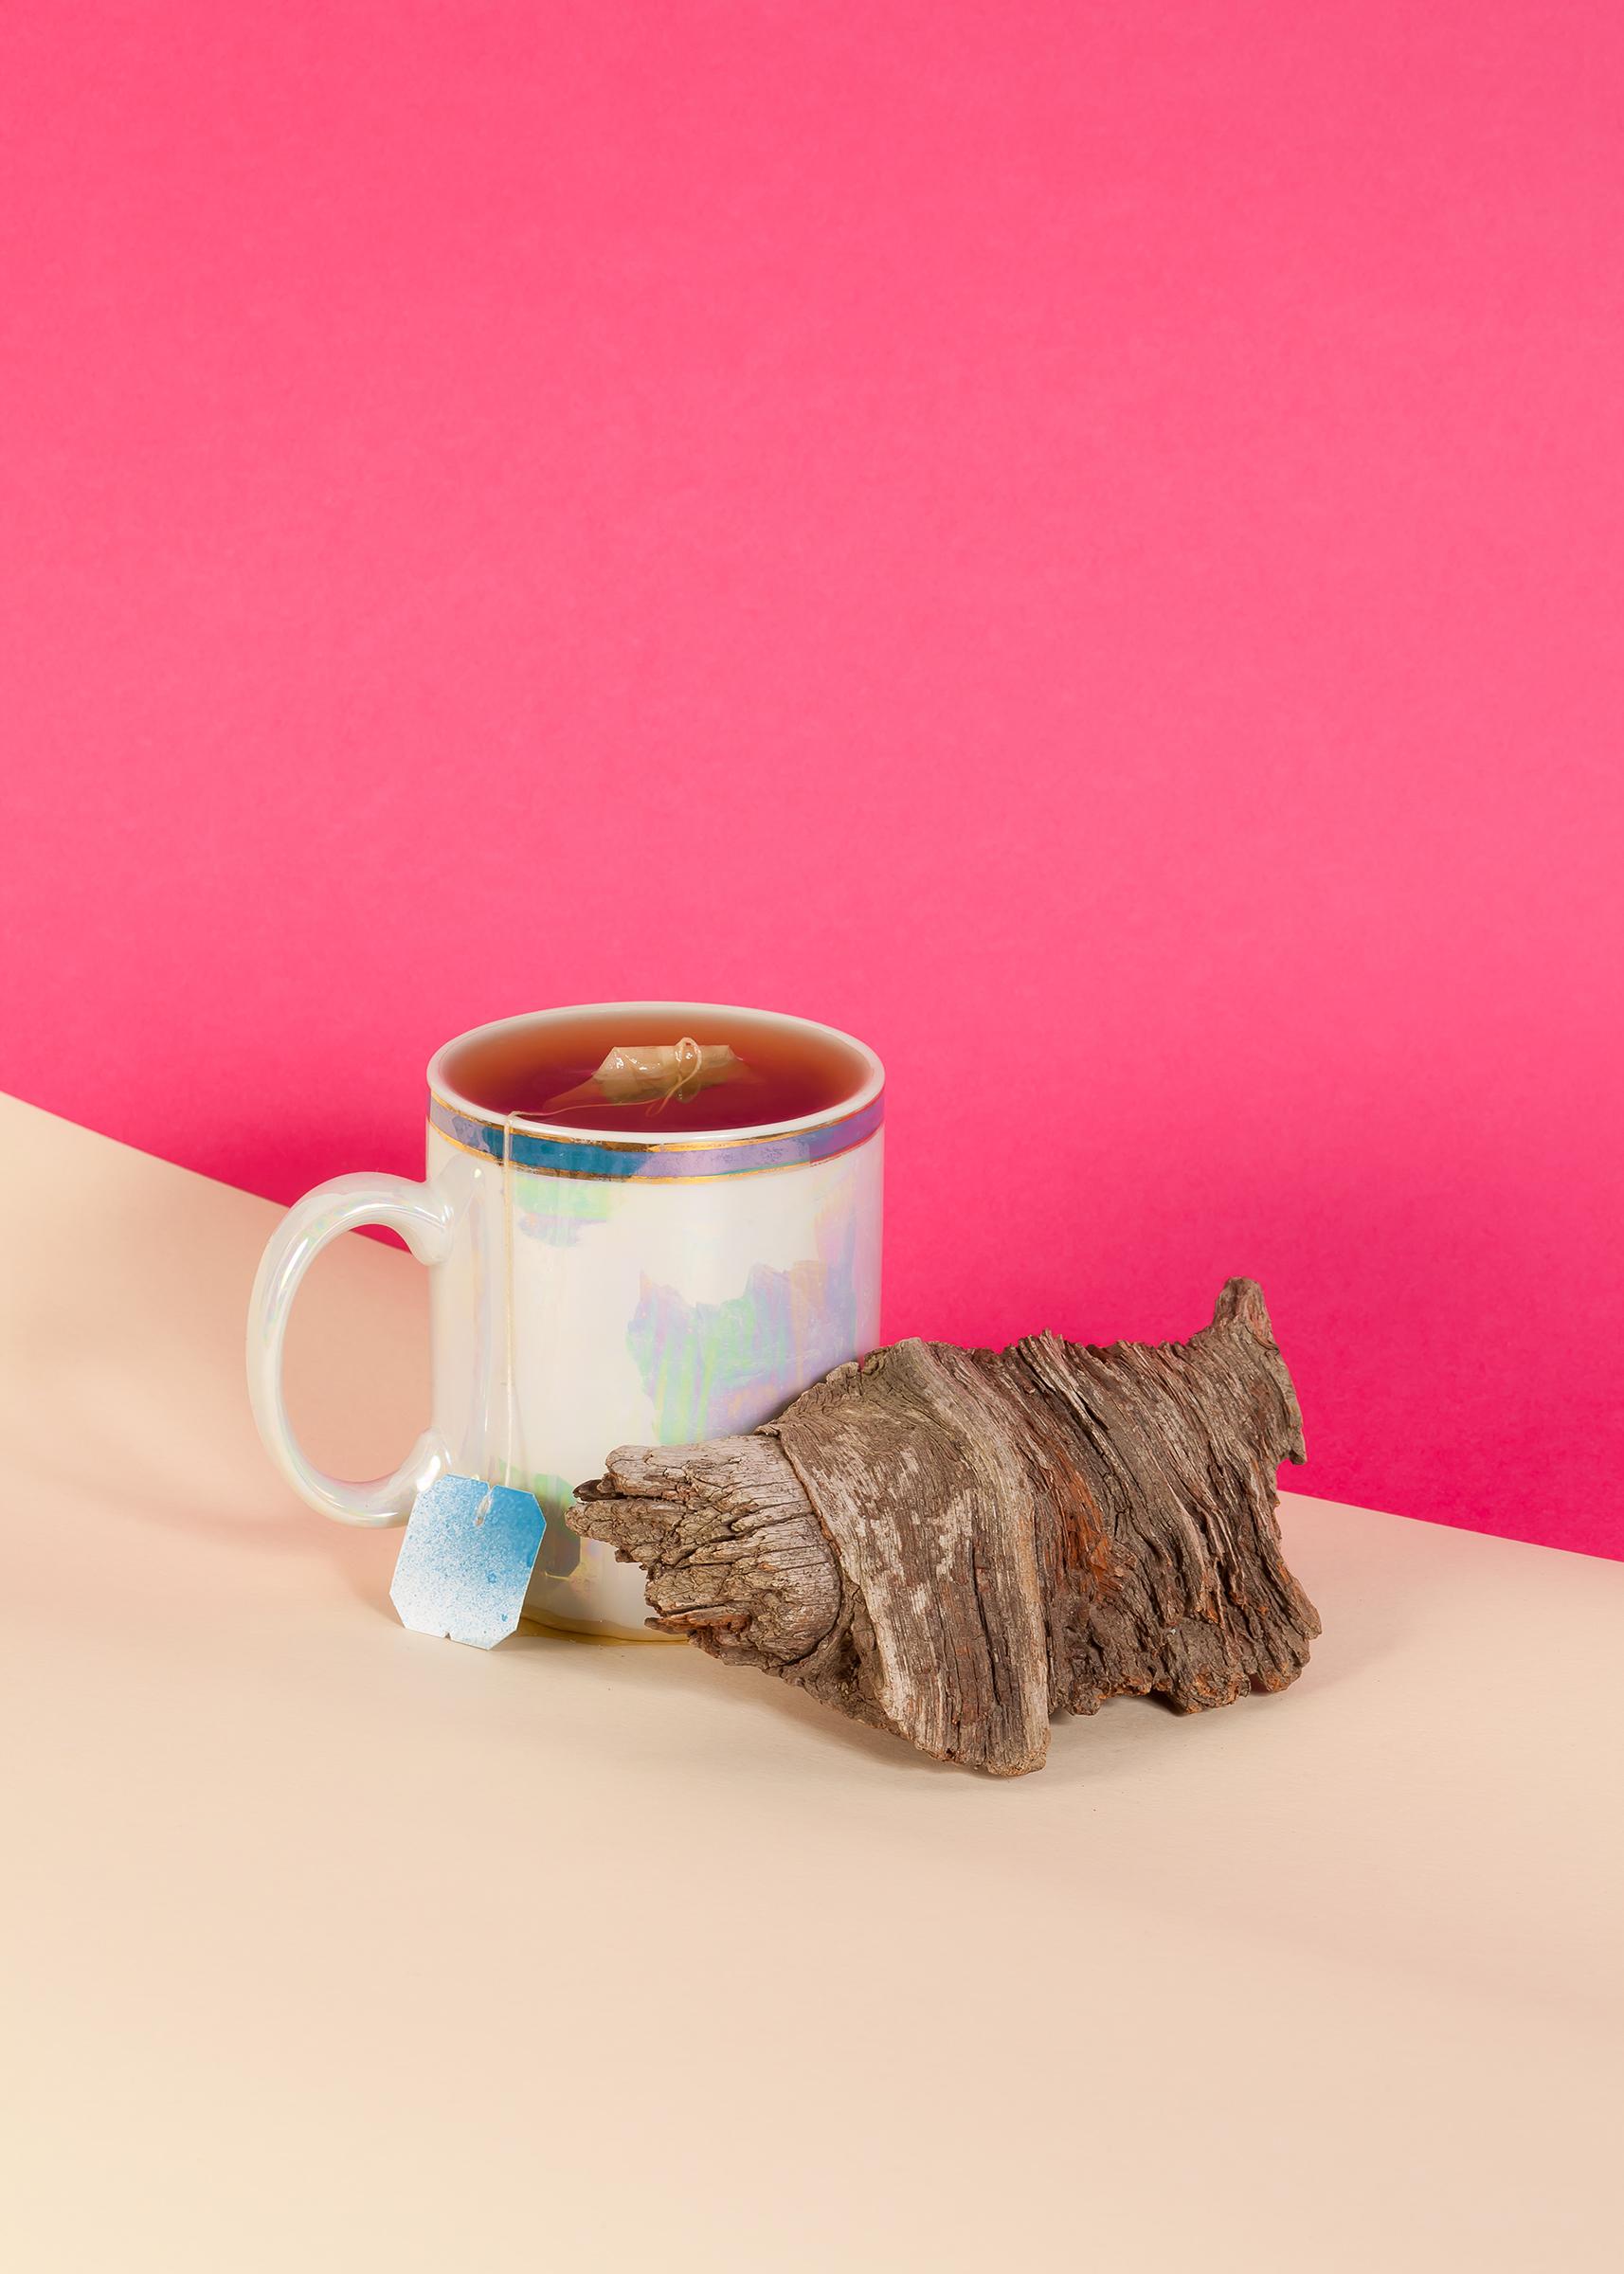 Ryan Rivadeneyra Still-Life Photograph - Pink Background Still Life Scene, Cup of Tea, Wood Croissant, Retro, Giclée 